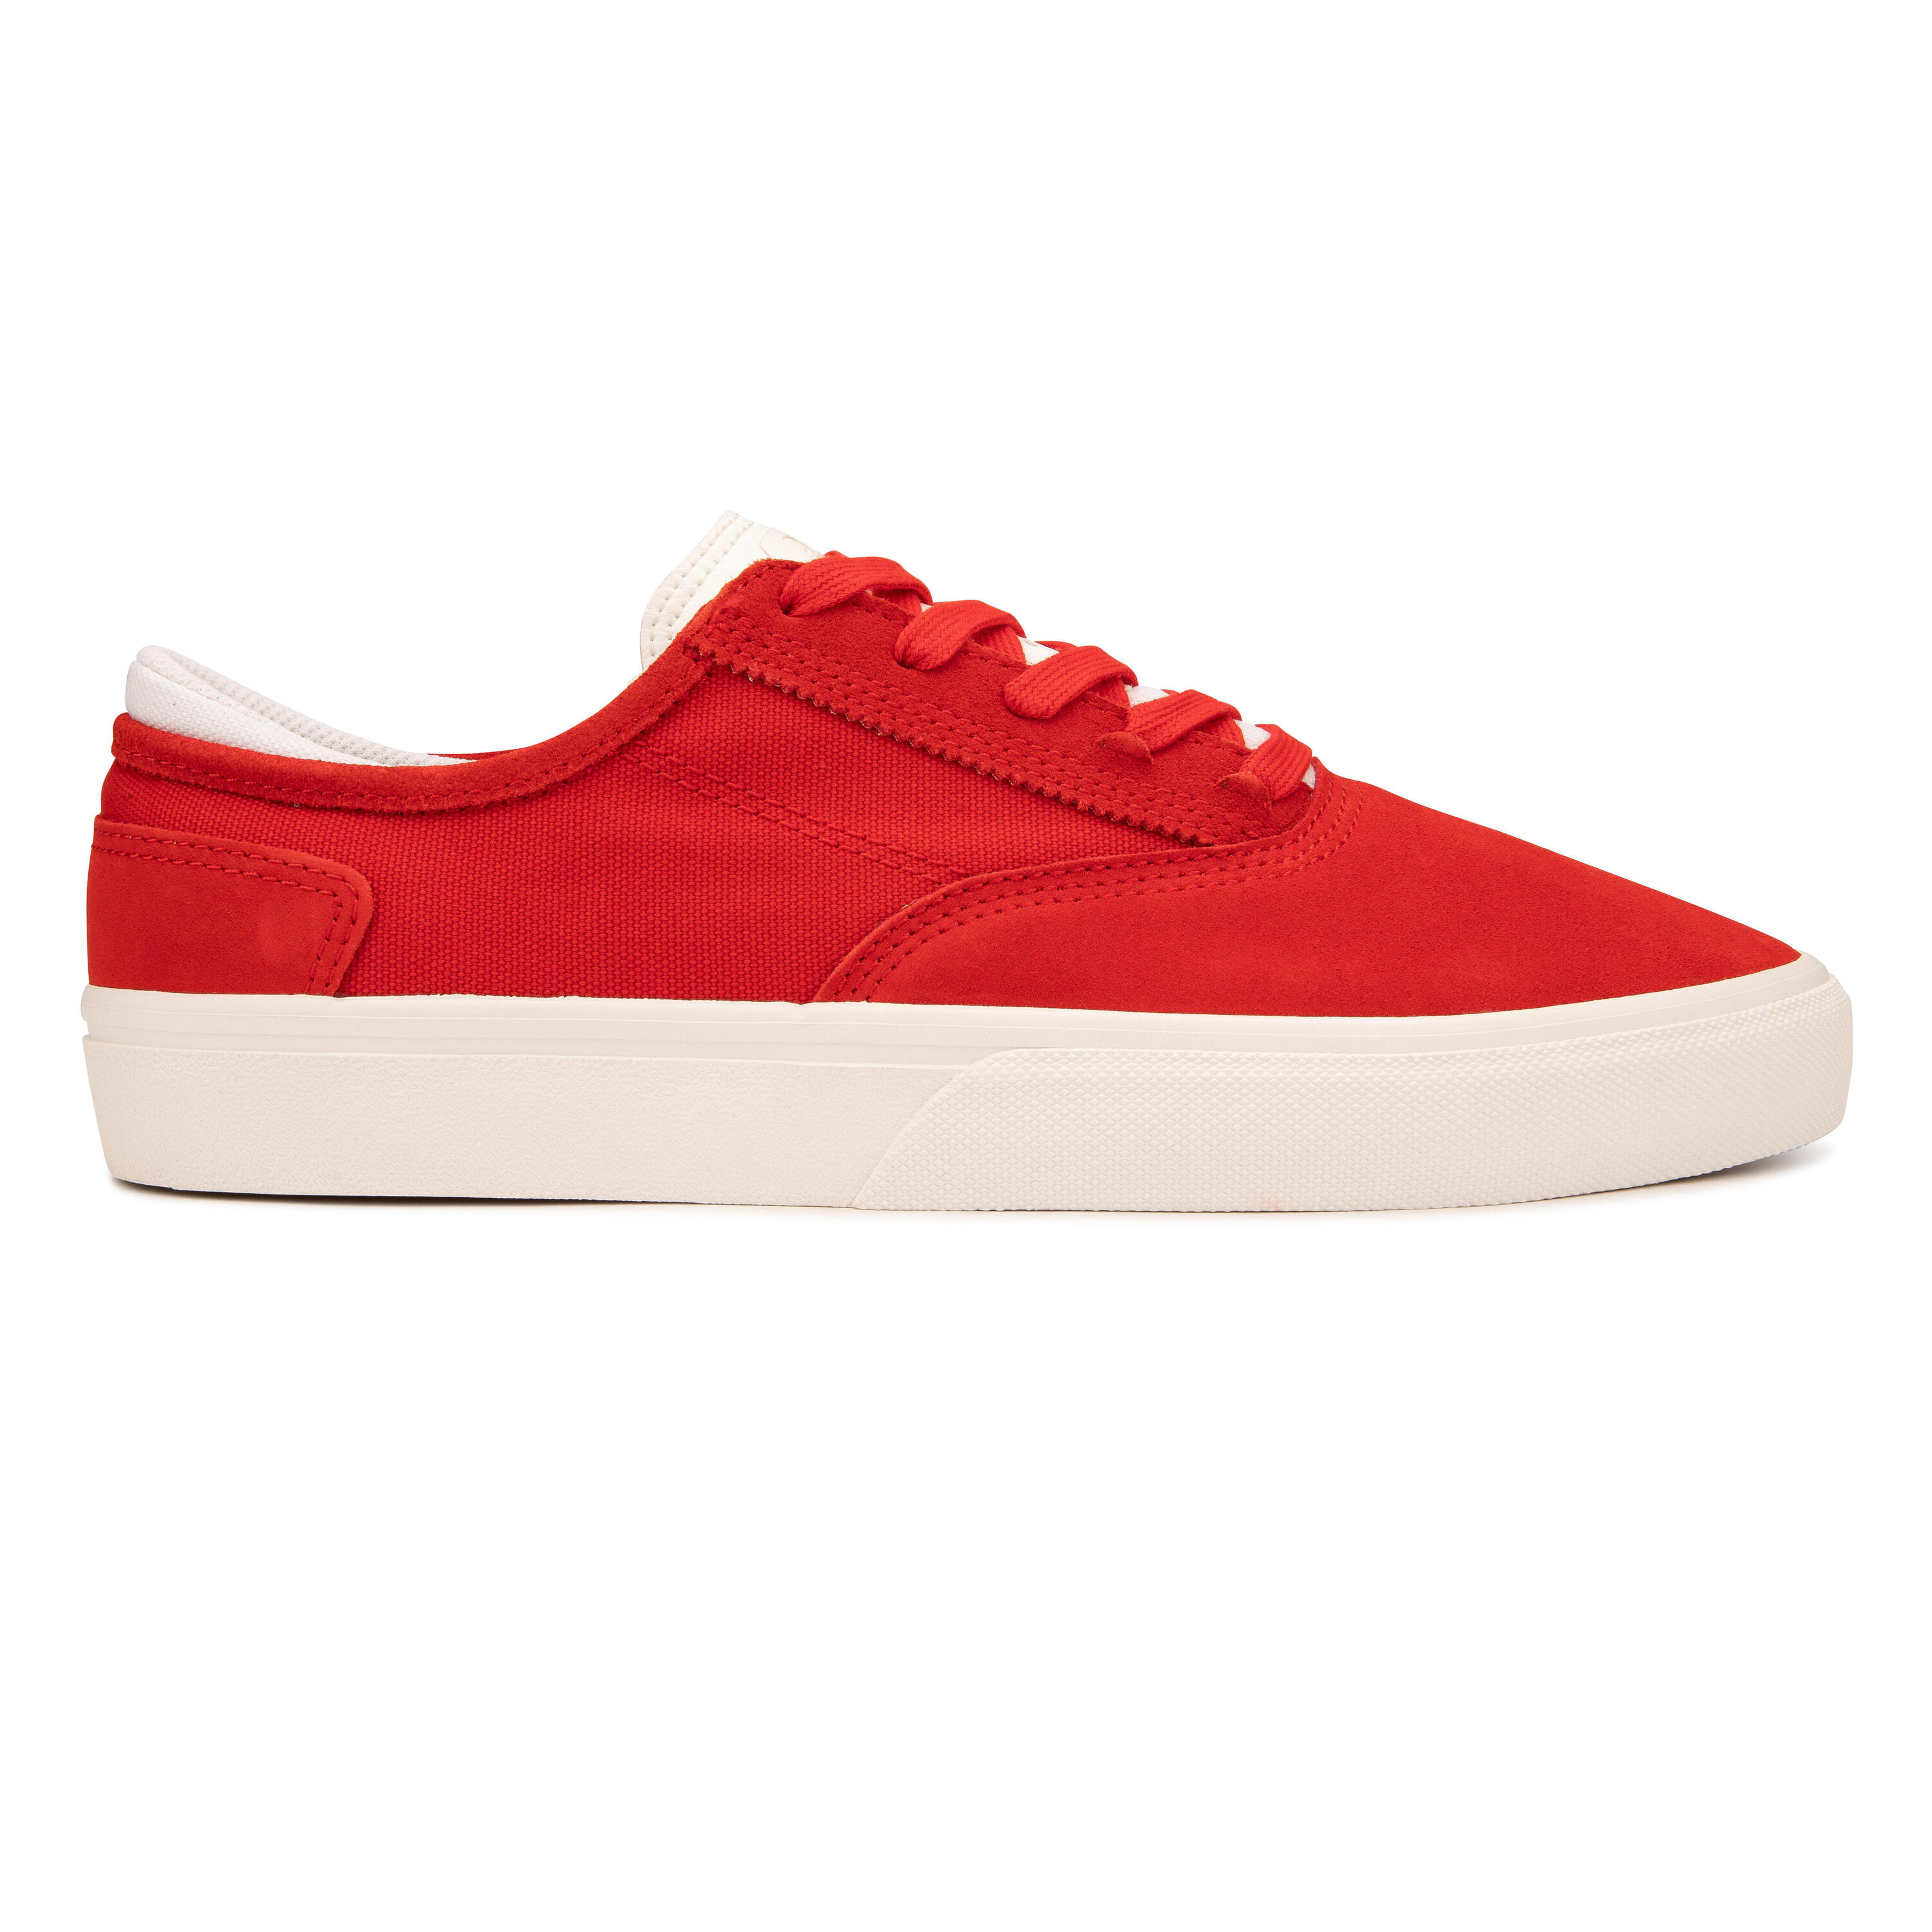 Adult Vulcanised Skate Shoes Vulca 500 II - Red/White 2/14